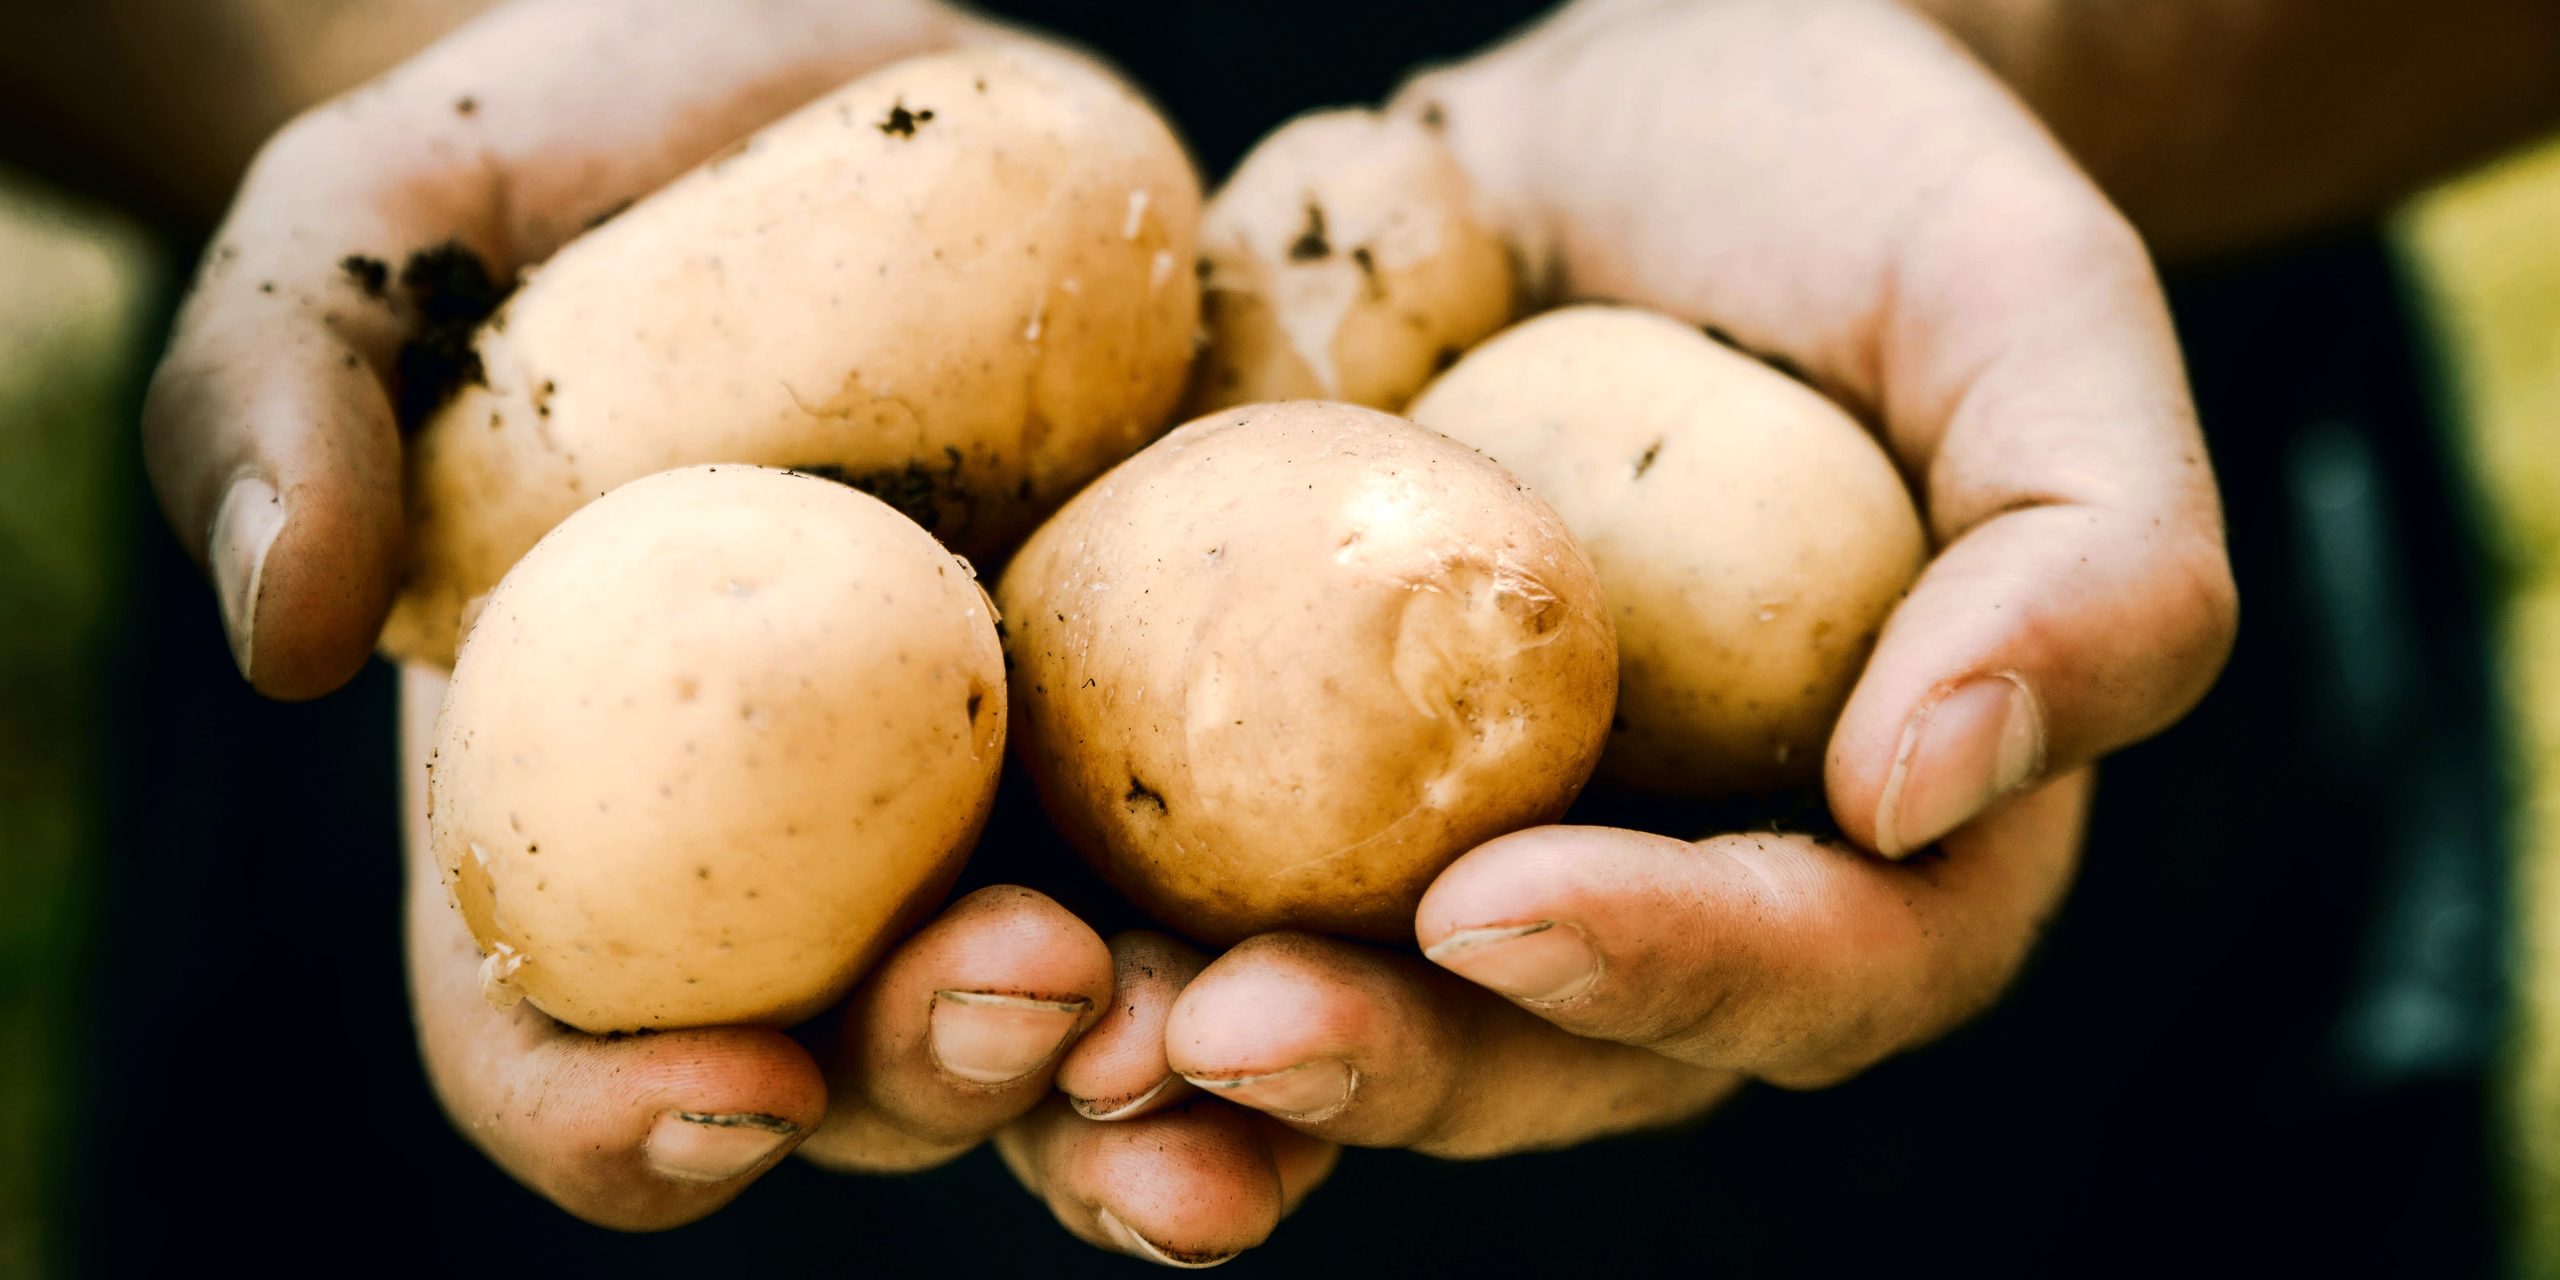 local potatoes